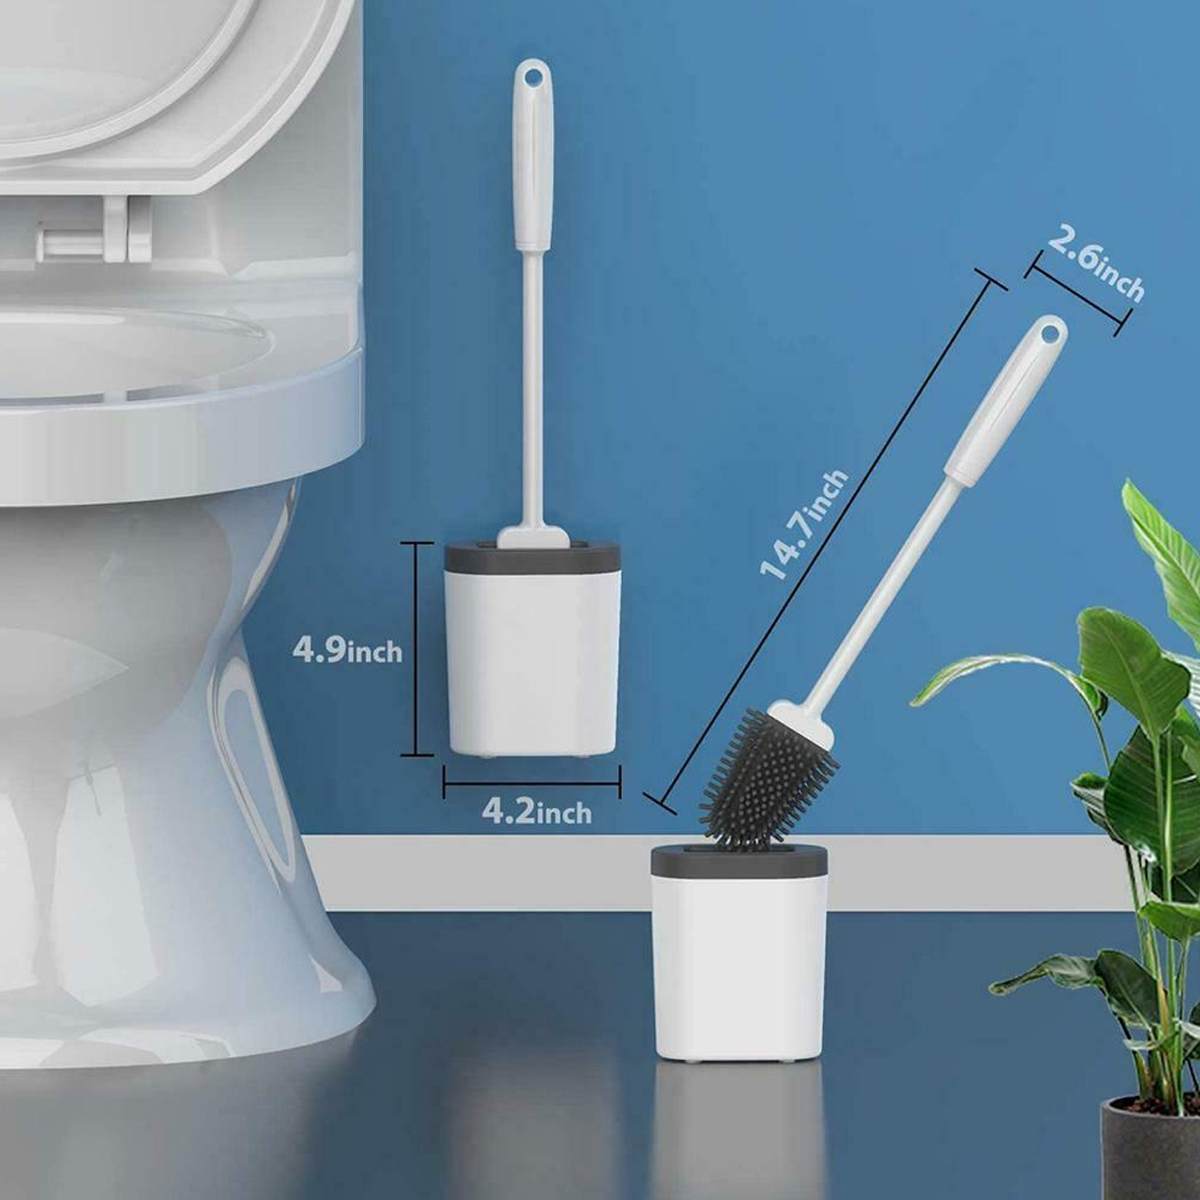 Silicone Soft Bristled Toilet Brush - Rezetto